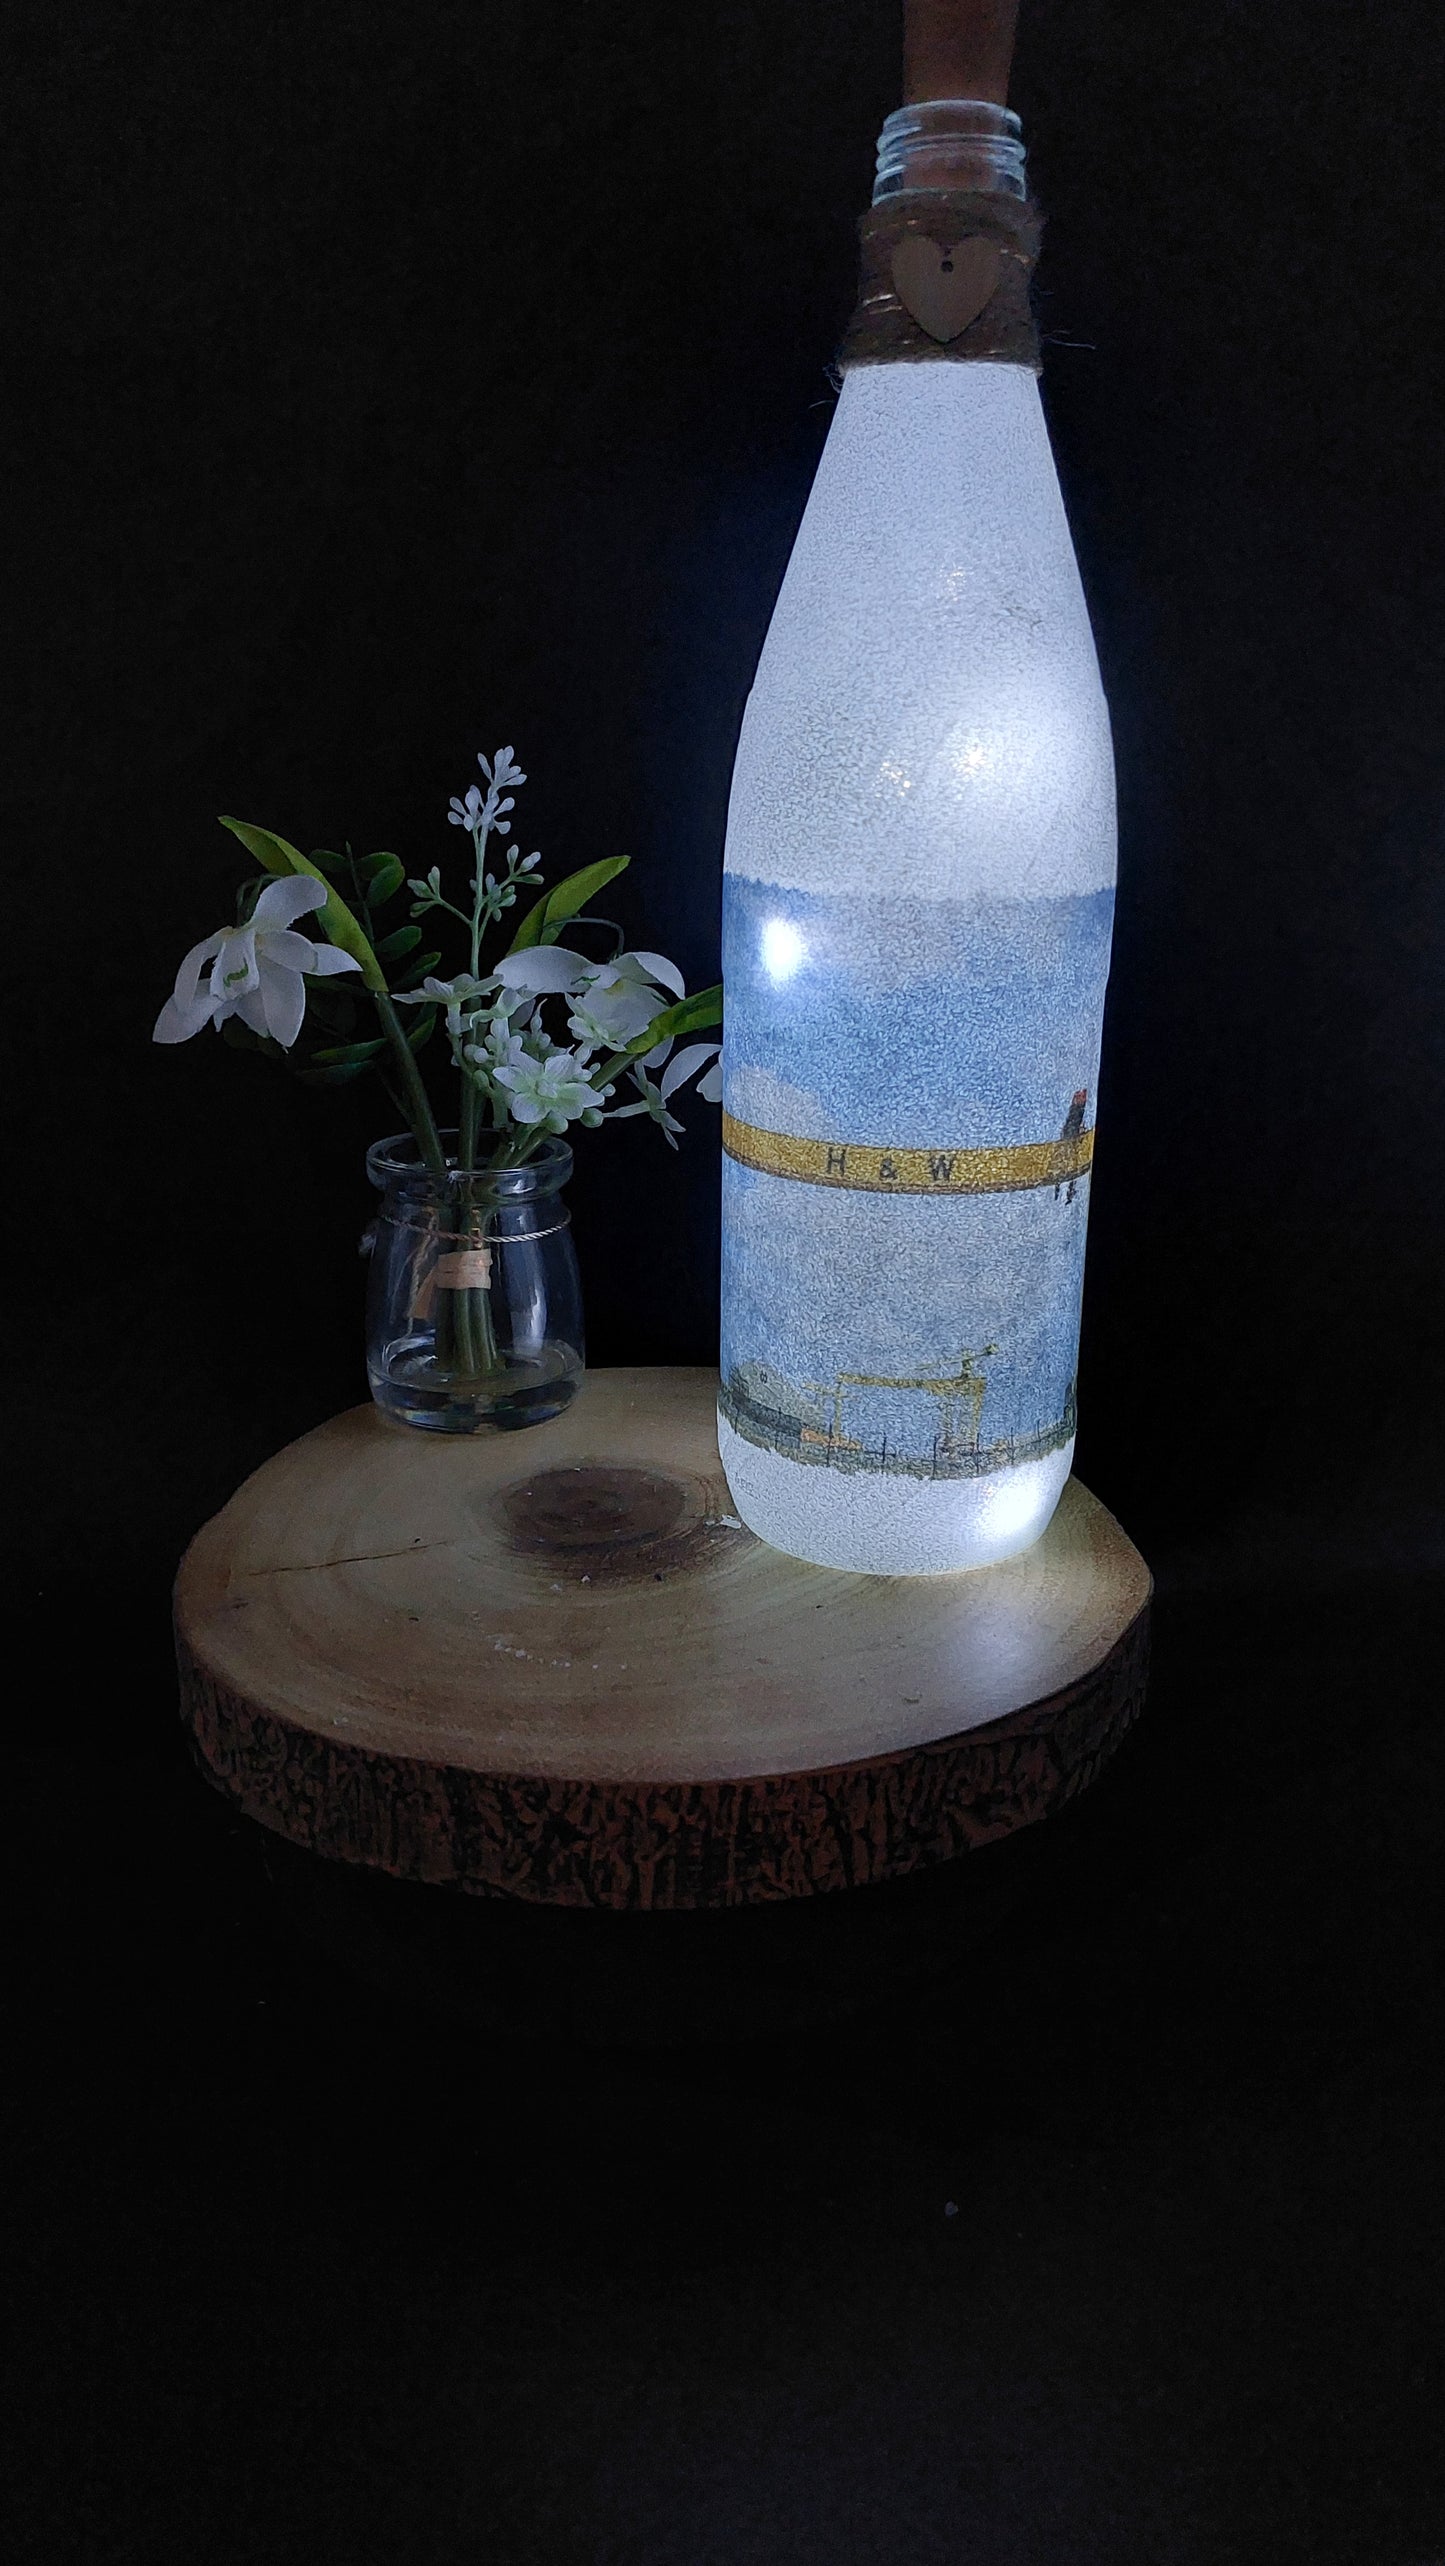 Harland & Wolff Light up bottle